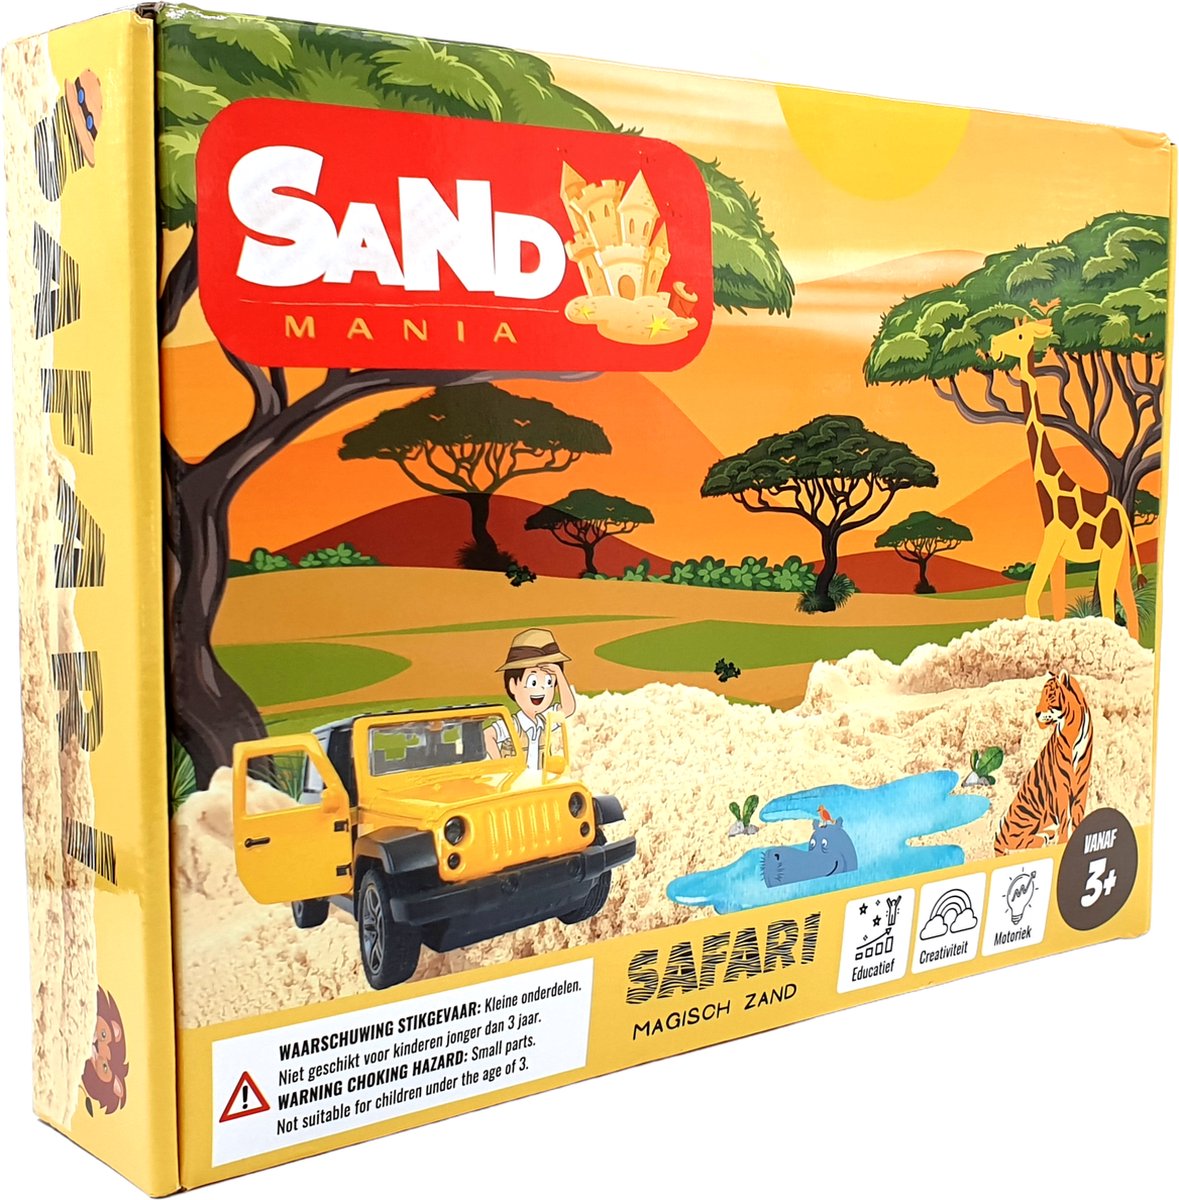 Sand mania - Kinetisch zand - Zandbak safari speelset - 1,5 kg magisch zand - Speelzand - Magic sand - Sensorisch speelgoed